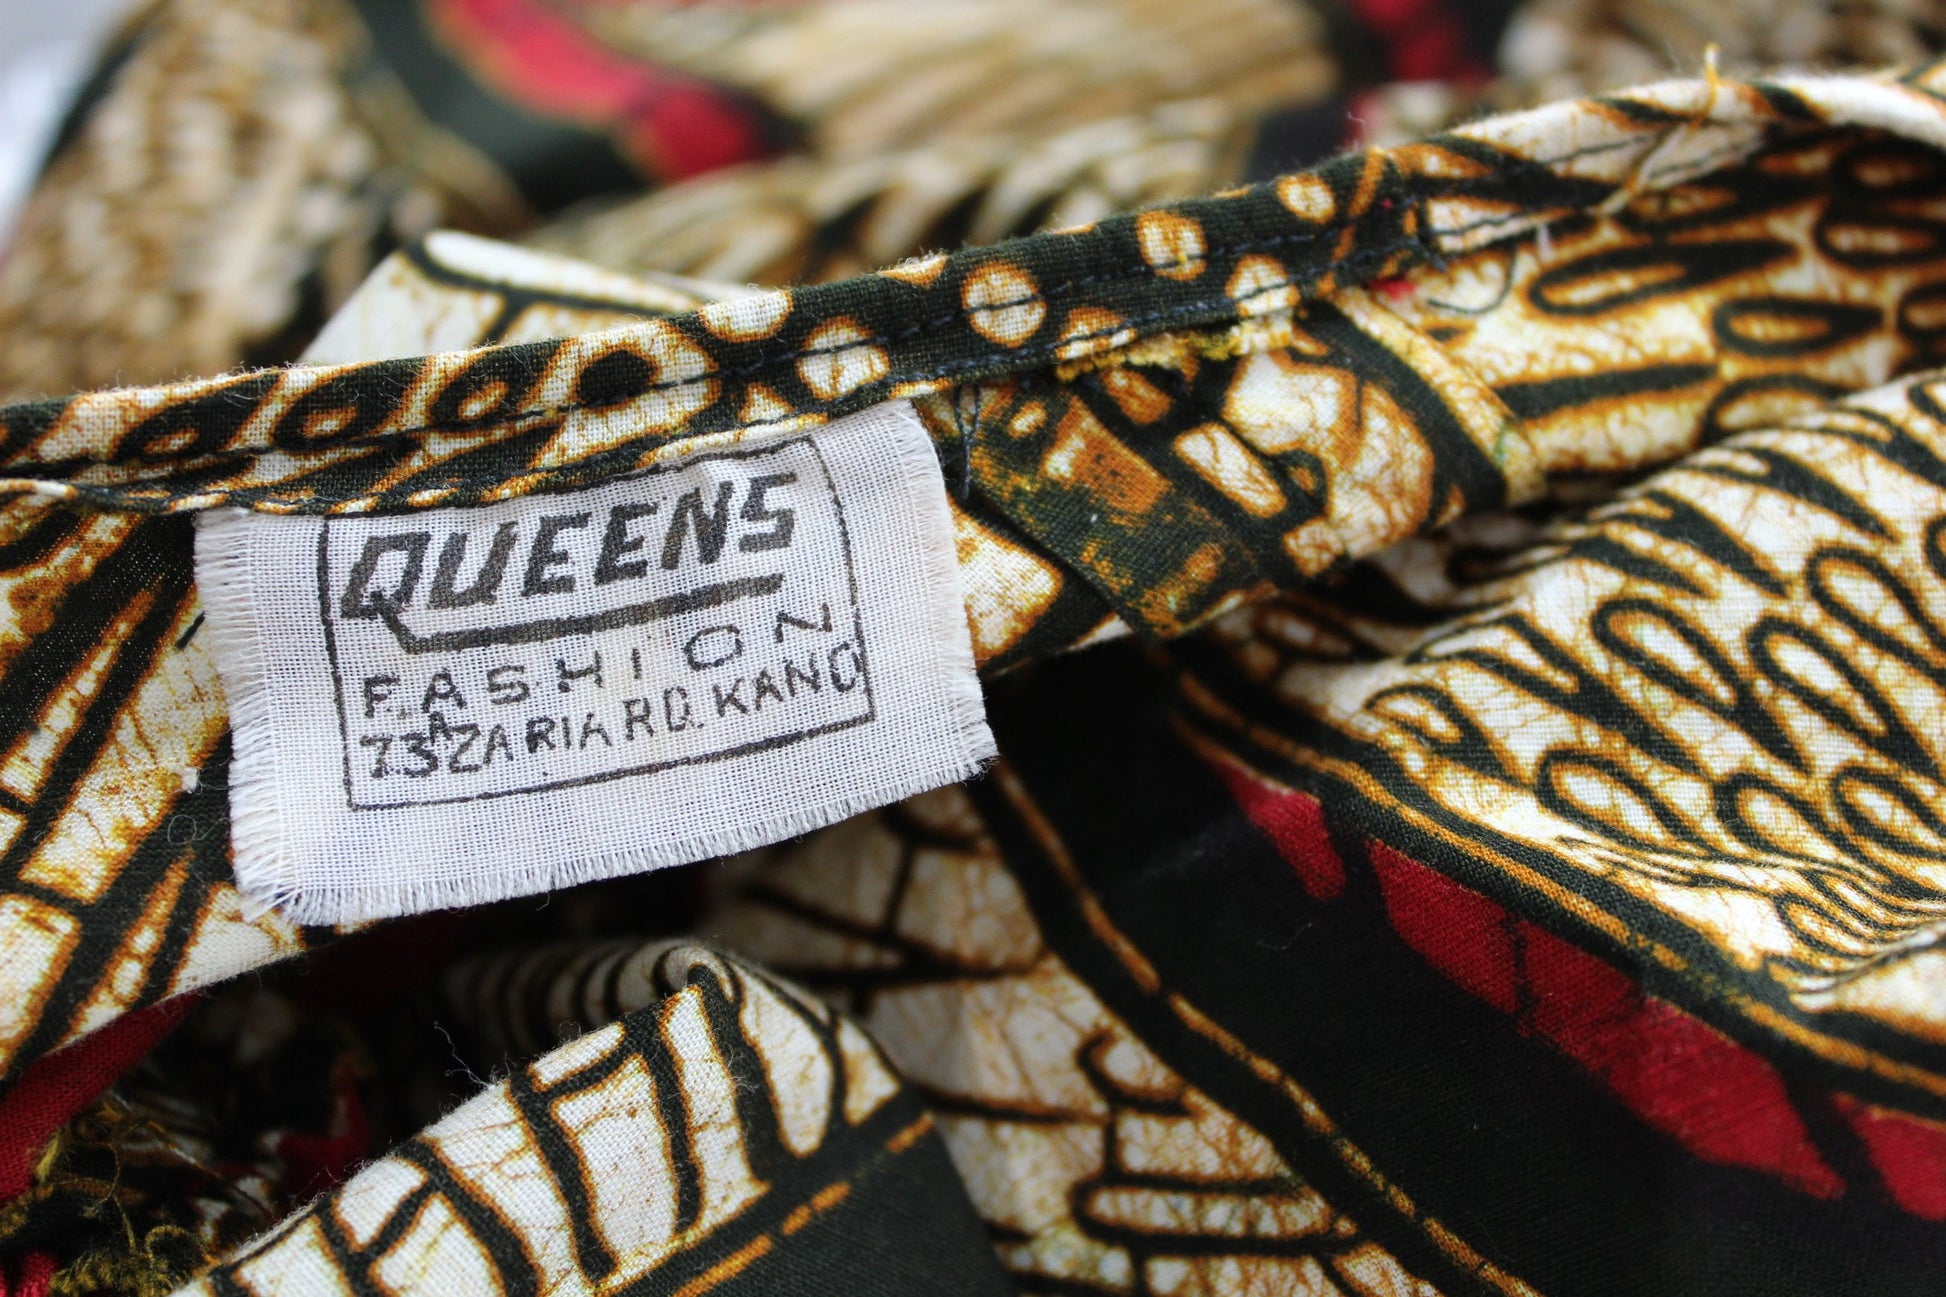 Vintage 1980s West Africa Dress Cotton Batik 2 Piece Tie Belt Custom Queen's Shop Kno Nigeria original tag kano nigeria